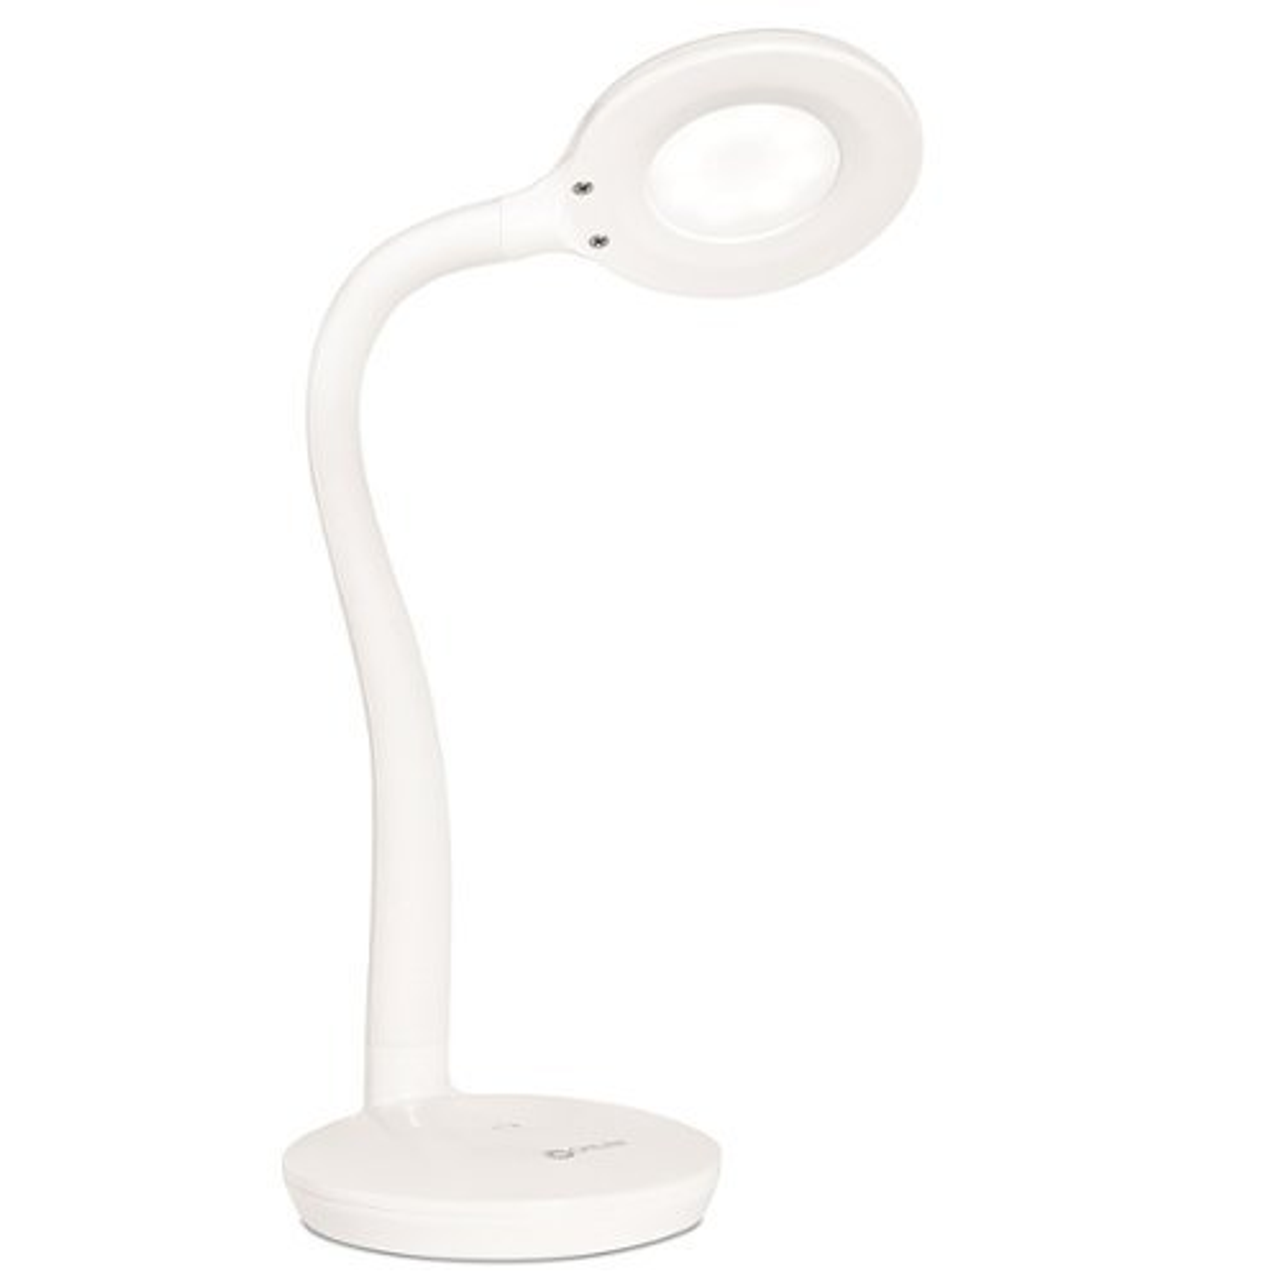 OttLite Soft Touch Flex Led Lamp - White